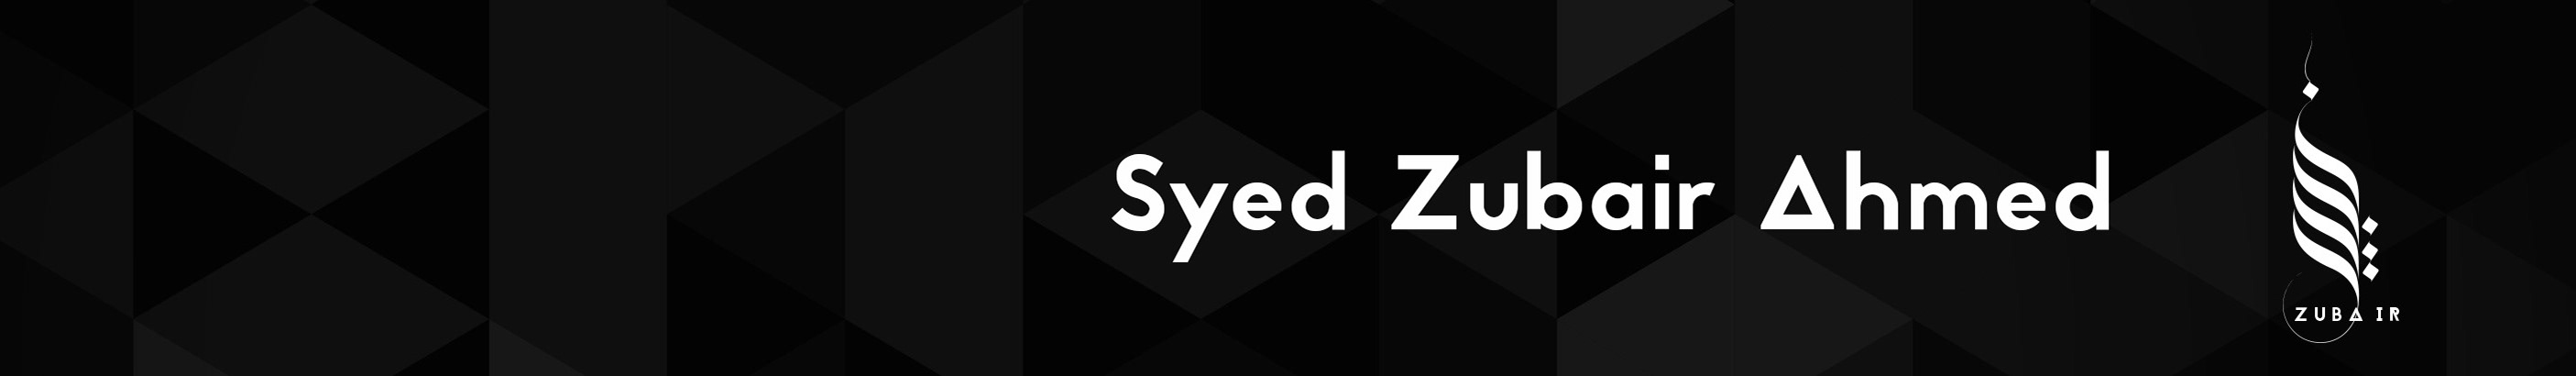 Banner de perfil de Syed Zubair Ahmed